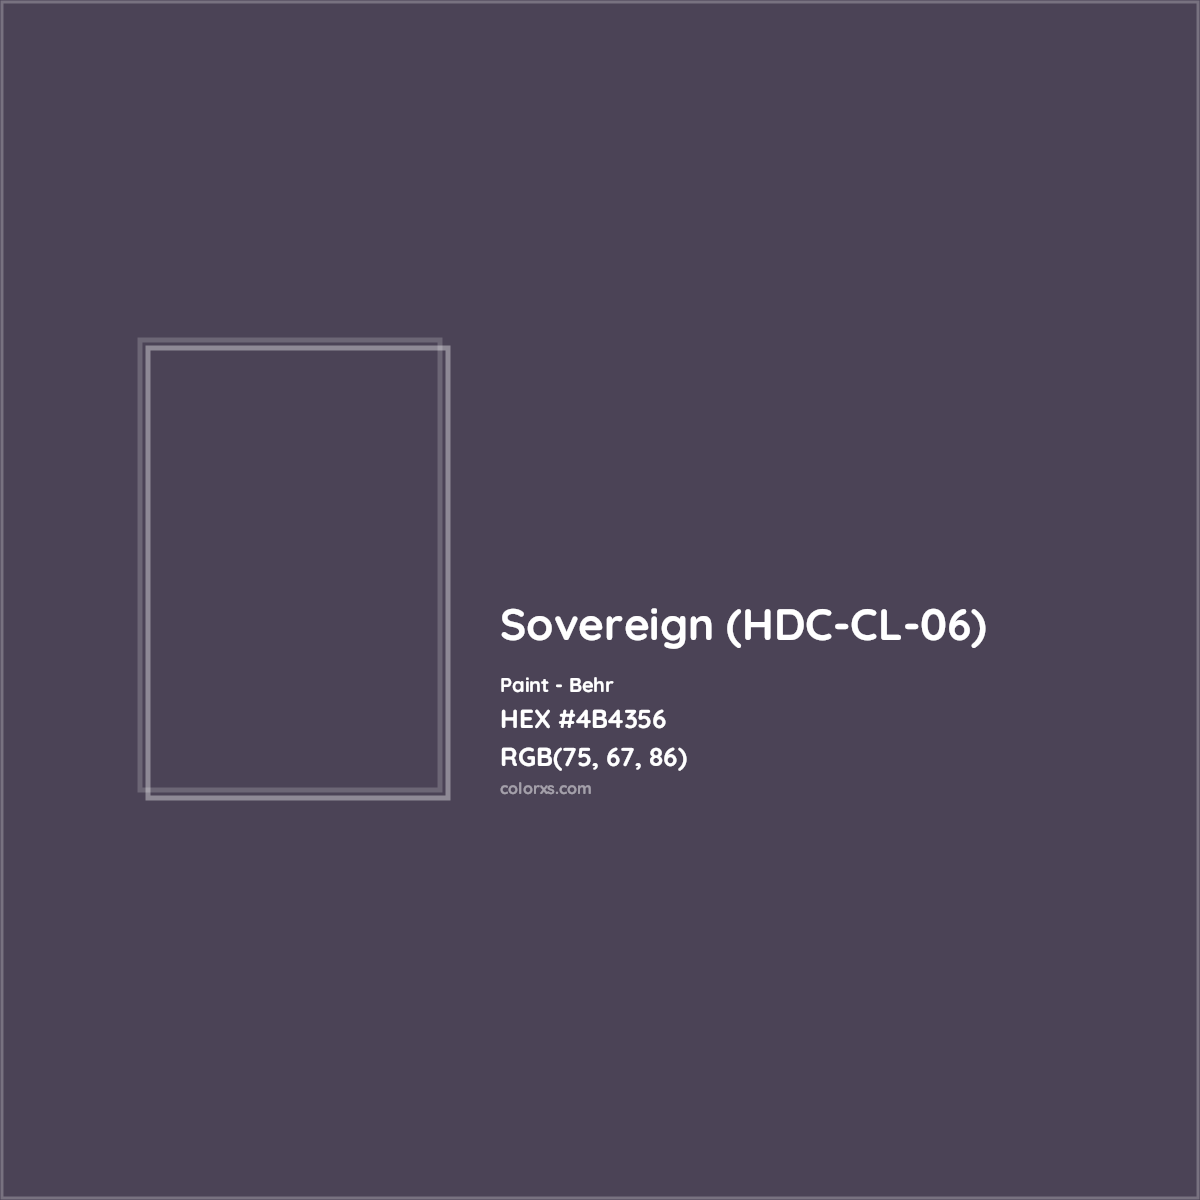 HEX #4B4356 Sovereign (HDC-CL-06) Paint Behr - Color Code